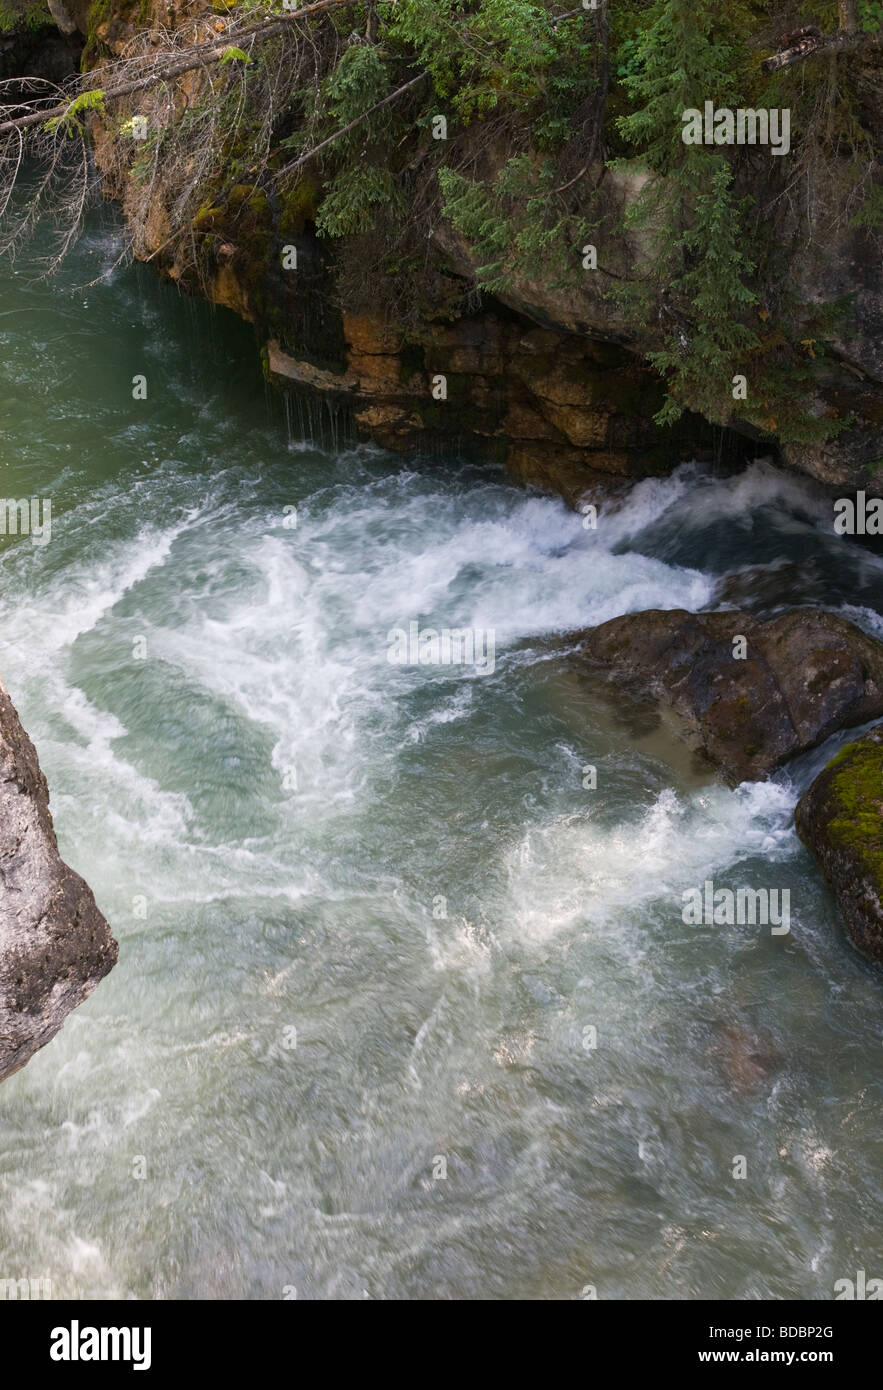 Water rushing through Maligne Canyon gorge. Stock Photo